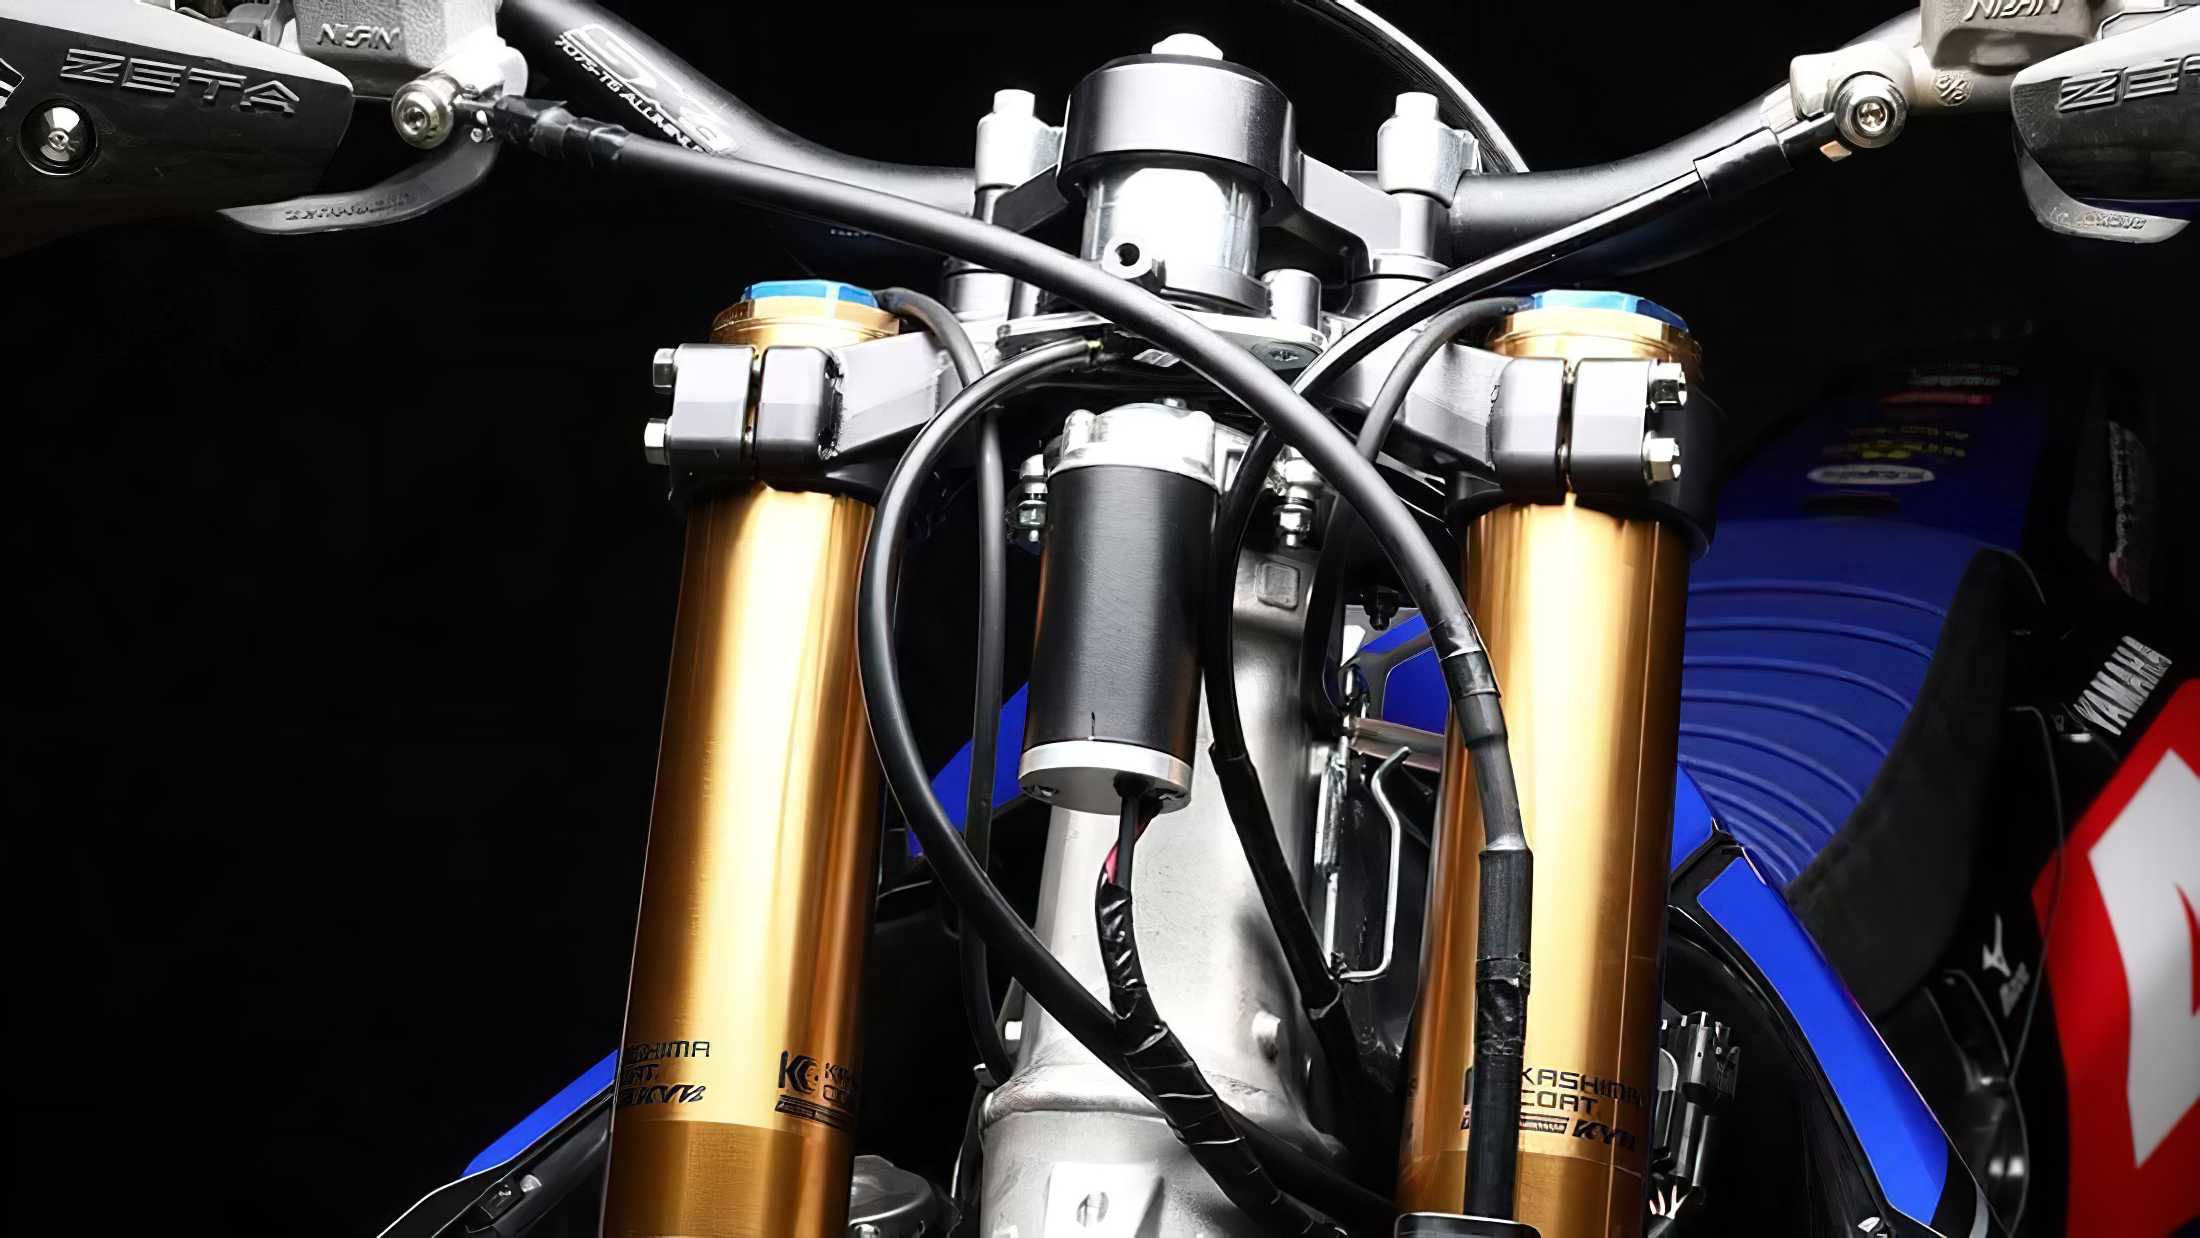 Yamaha Lenksystem - Electronic Power Steering
- auch in der MOTORRAD NACHRICHTEN APP